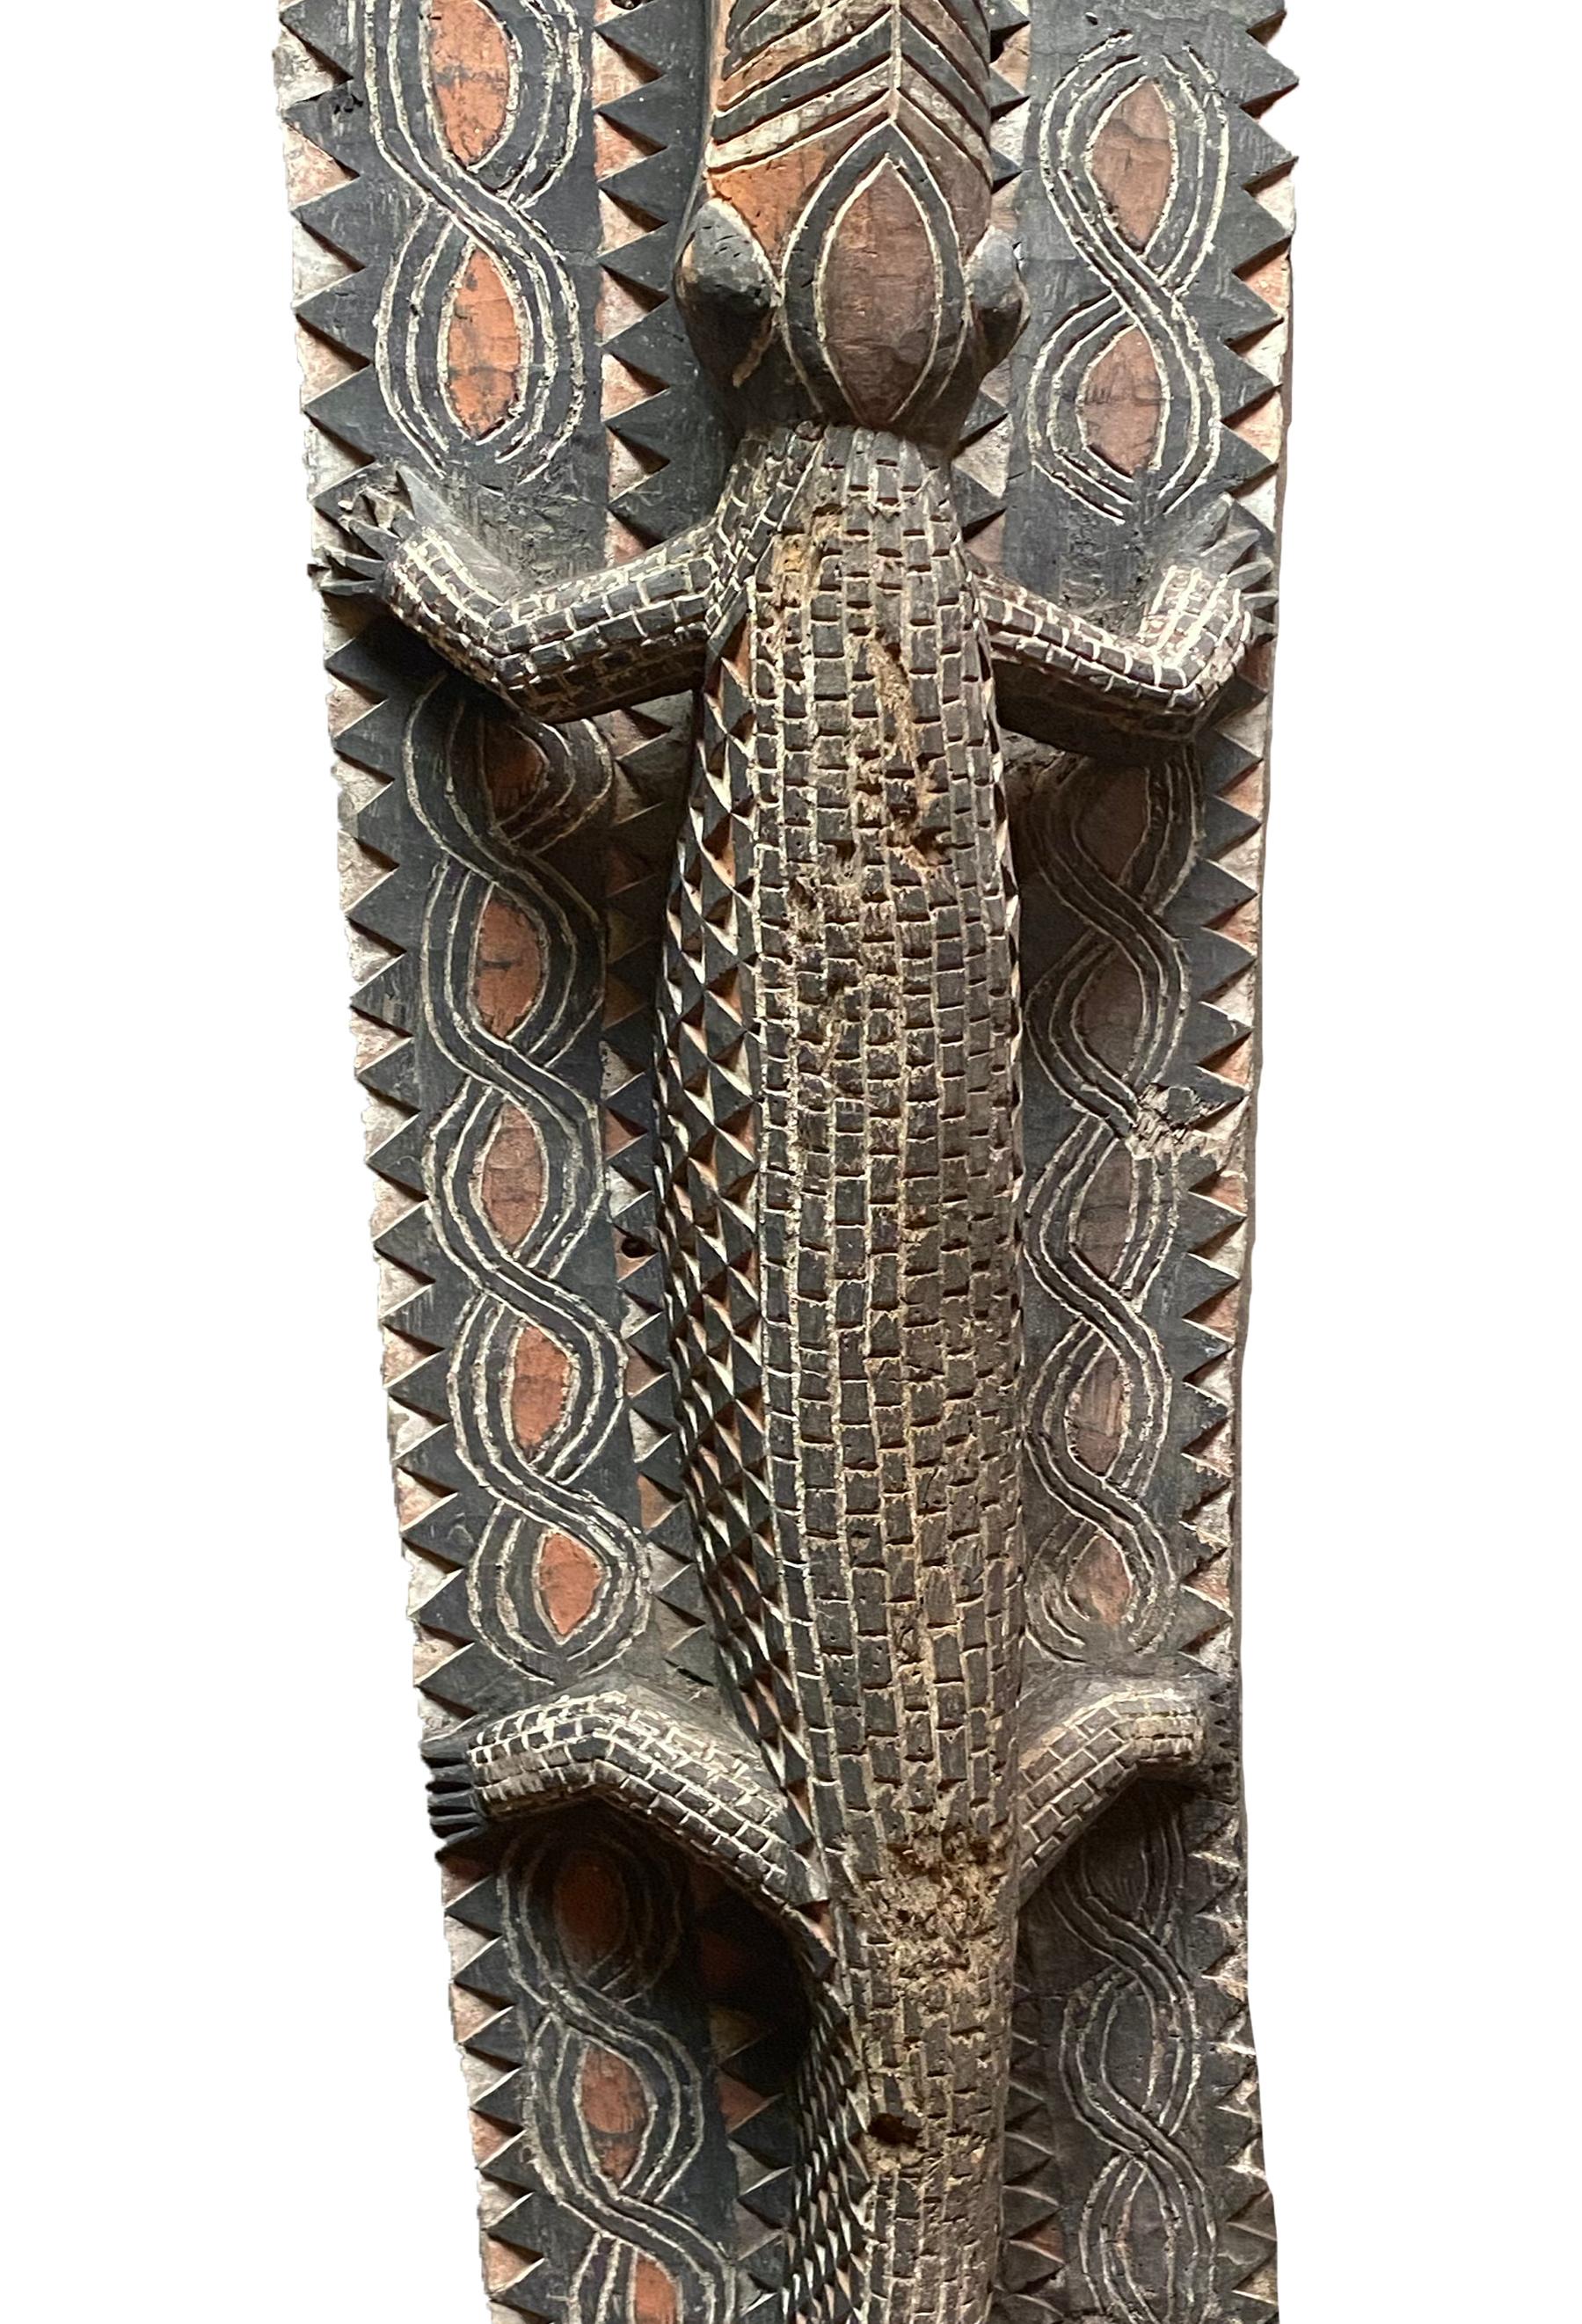 indonesia crocodile